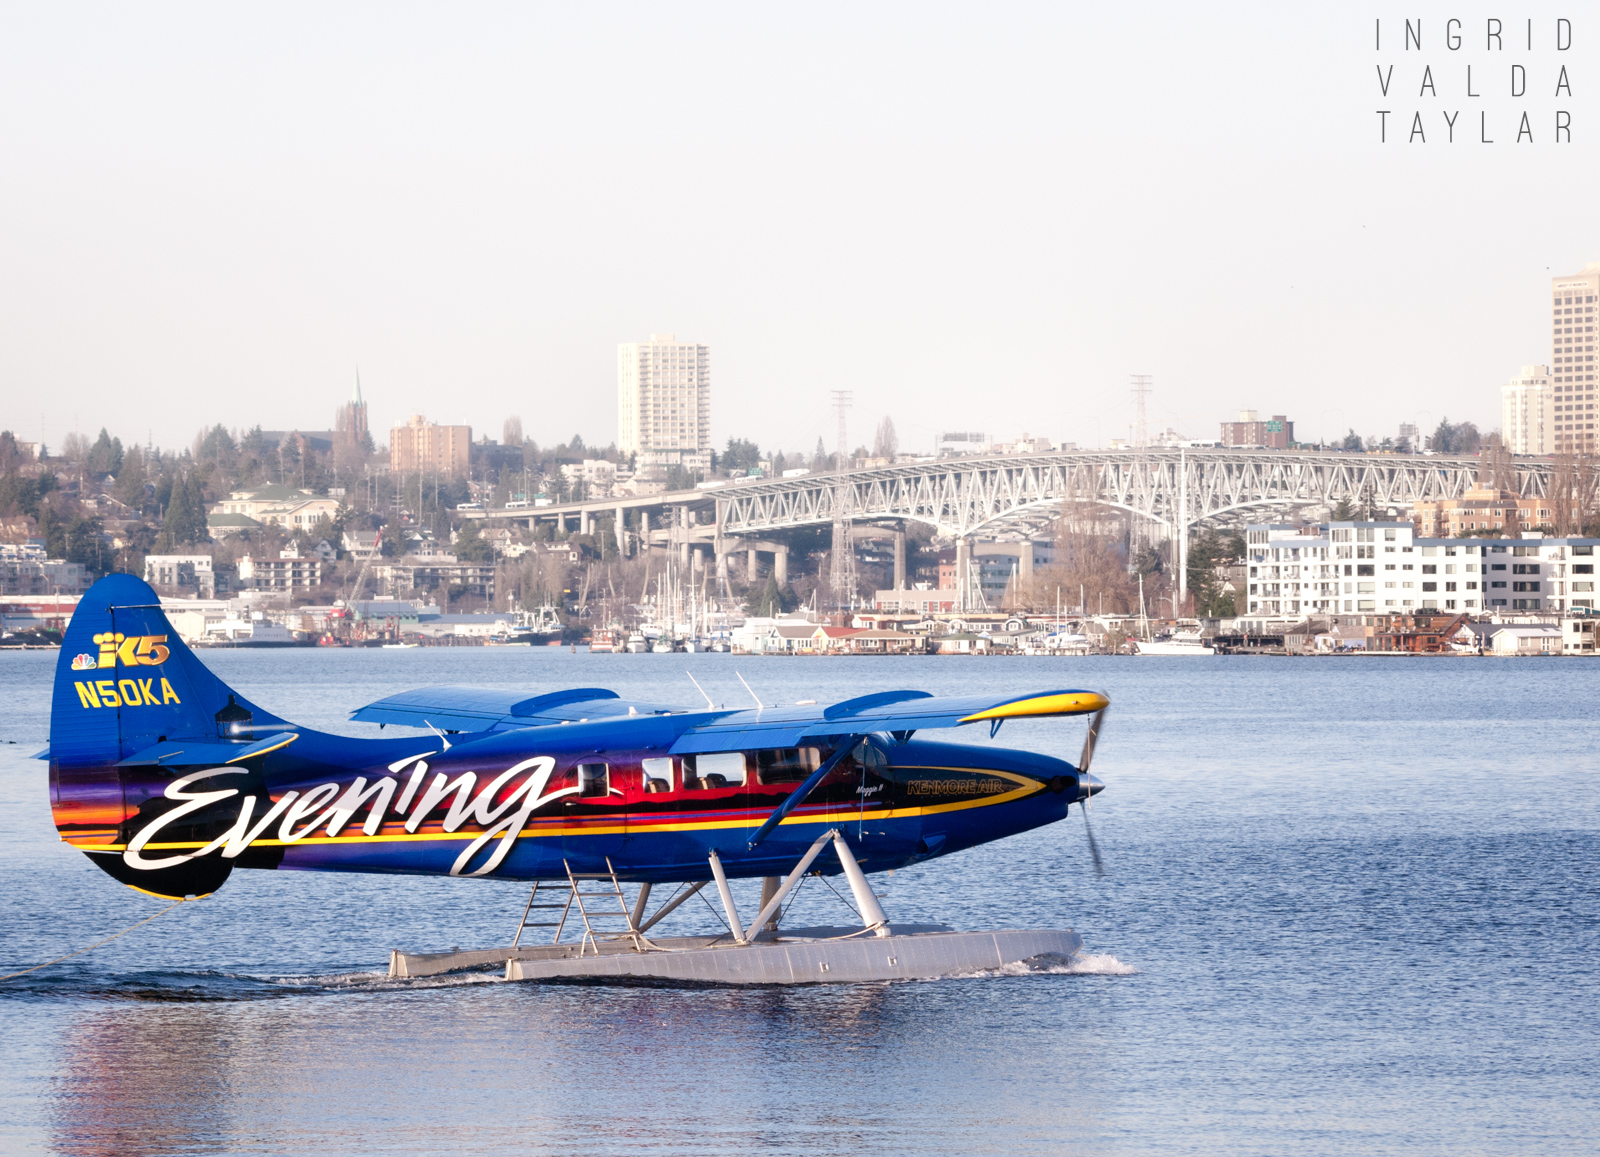 King Five Seaplane on Lake Union